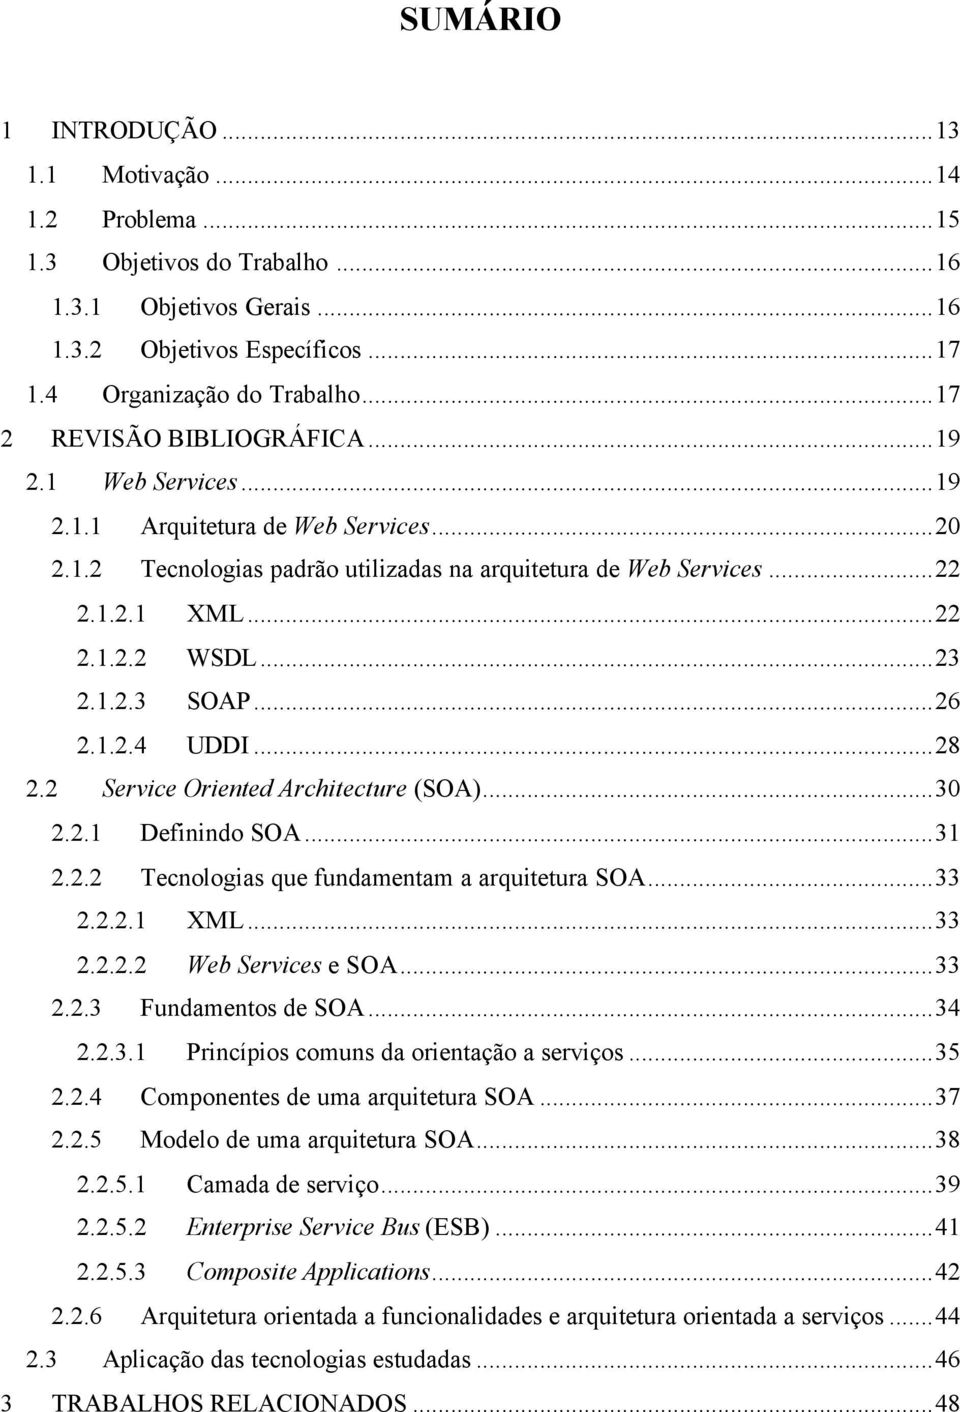 ..23 2.1.2.3 SOAP...26 2.1.2.4 UDDI...28 2.2 Service Oriented Architecture (SOA)...30 2.2.1 Definindo SOA...31 2.2.2 Tecnologias que fundamentam a arquitetura SOA...33 2.2.2.1 XML...33 2.2.2.2 Web Services e SOA.